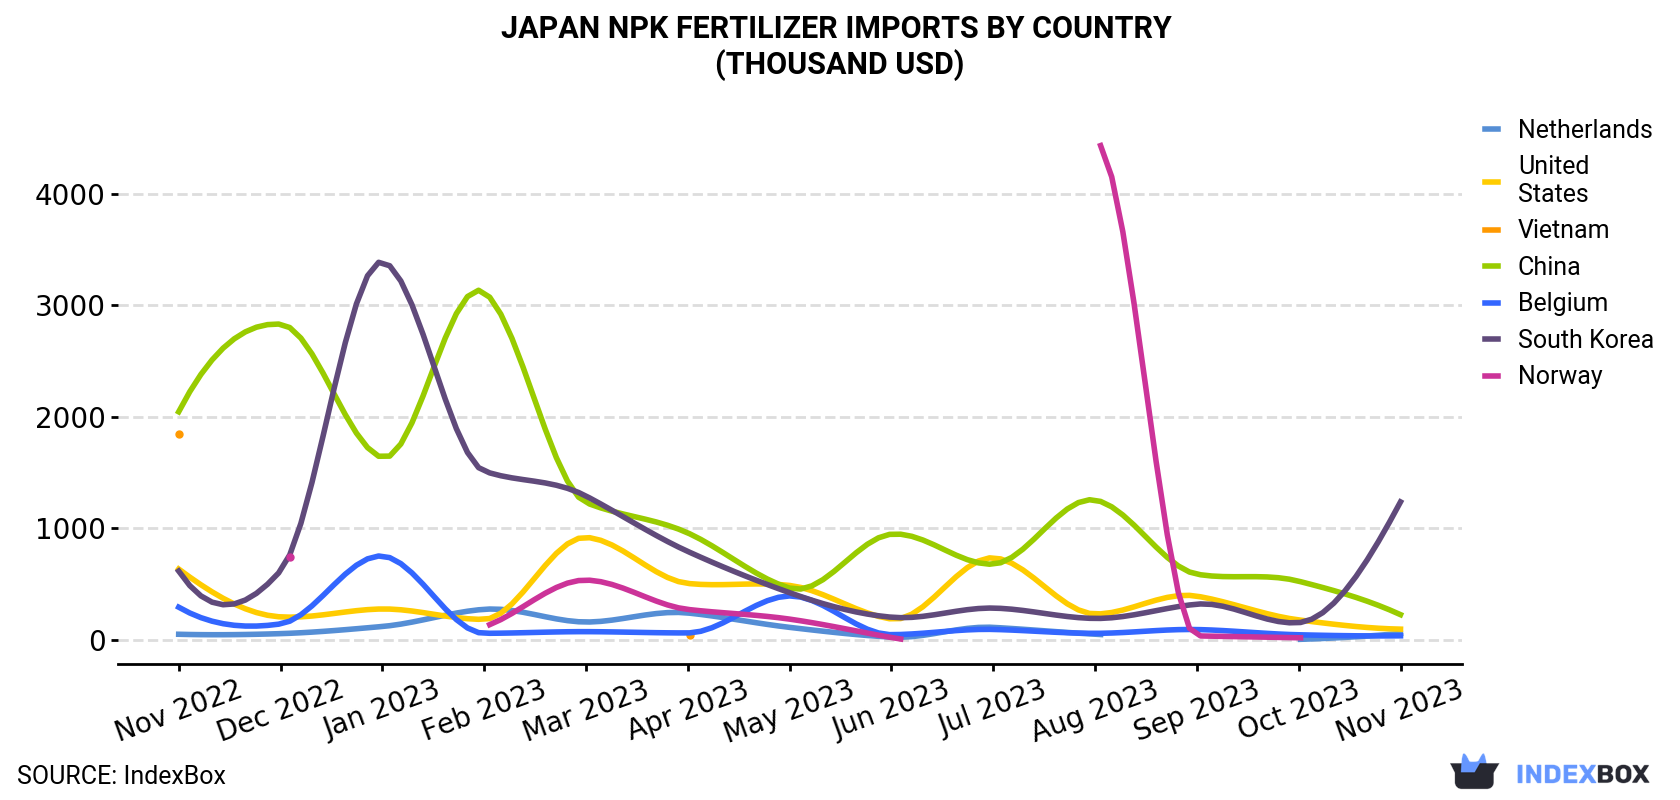 Japan NPK Fertilizer Imports By Country (Thousand USD)